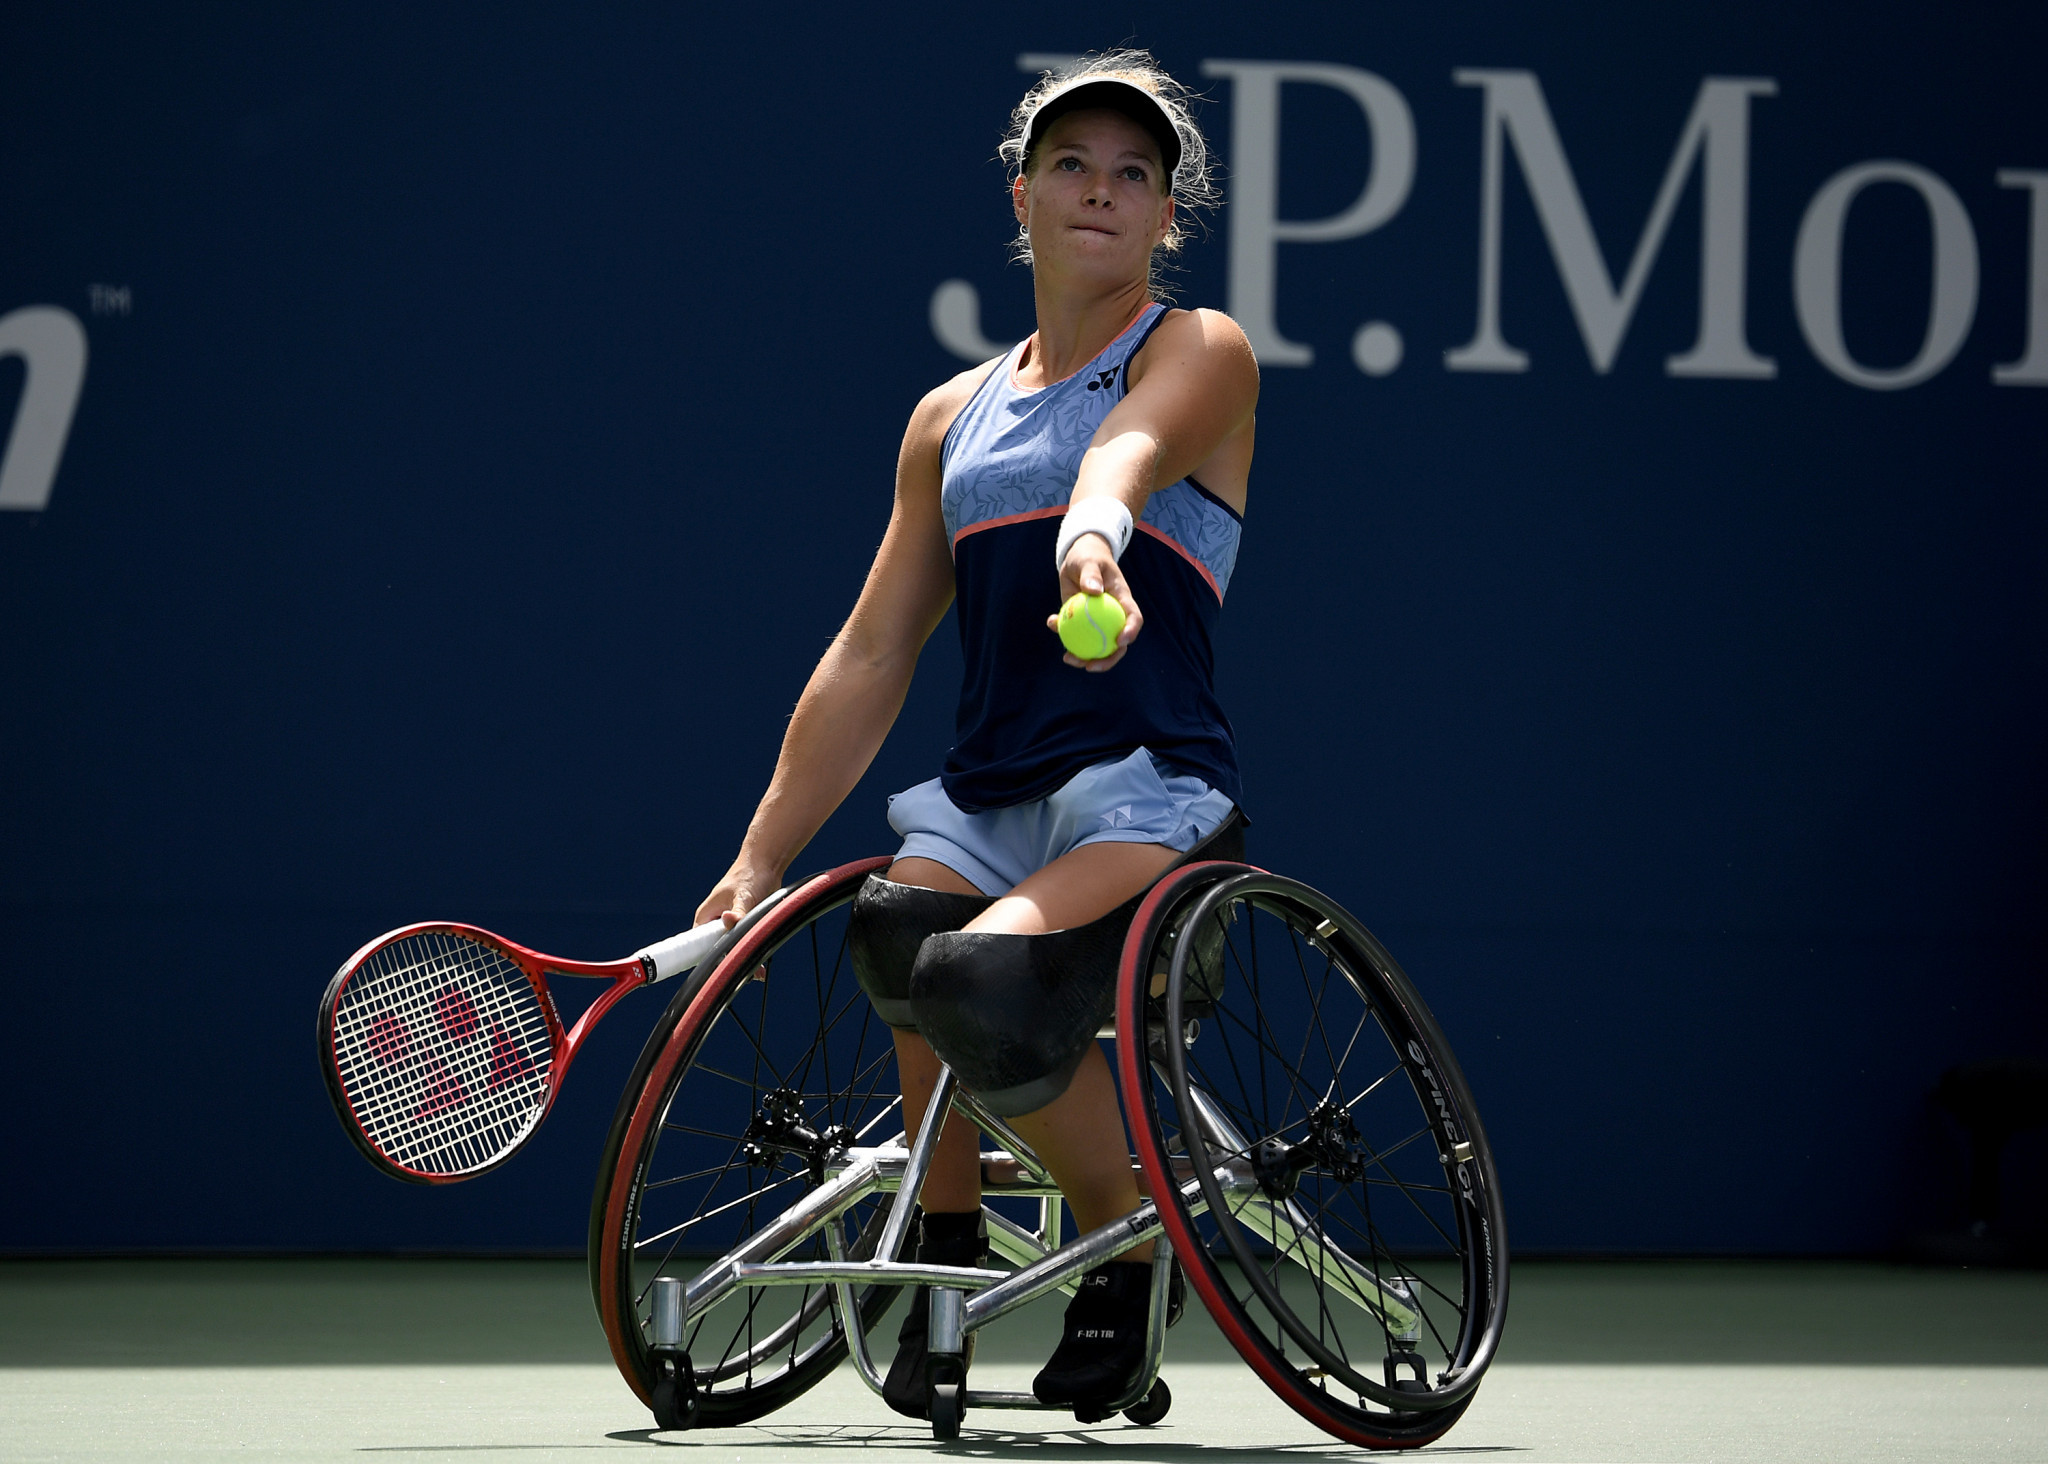 De Groot targeting two wheelchair tennis golds at Tokyo 2020